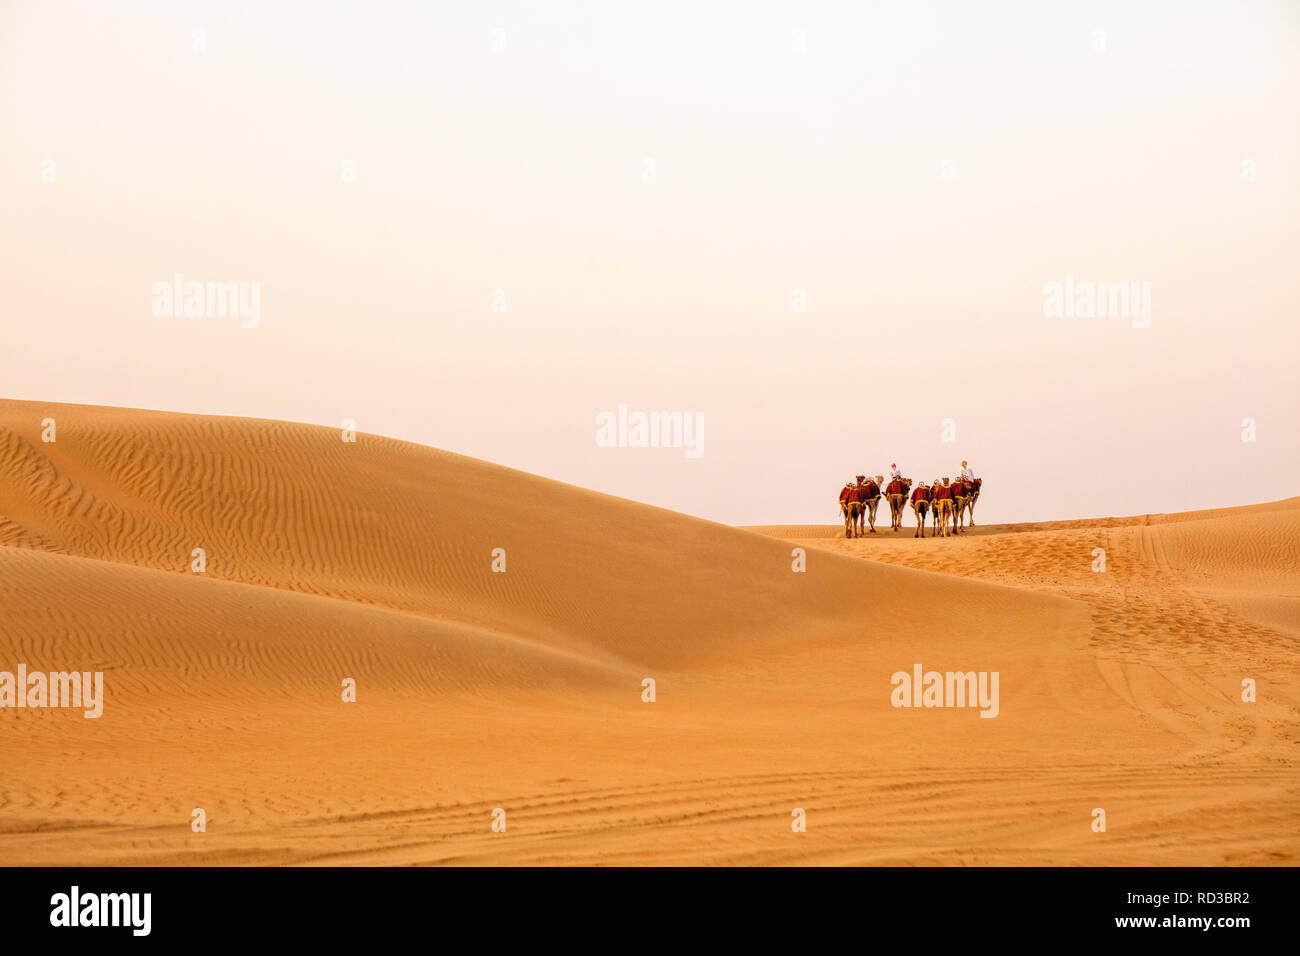 A camel caravan in the Rub' al Khali desert. Stock Photo